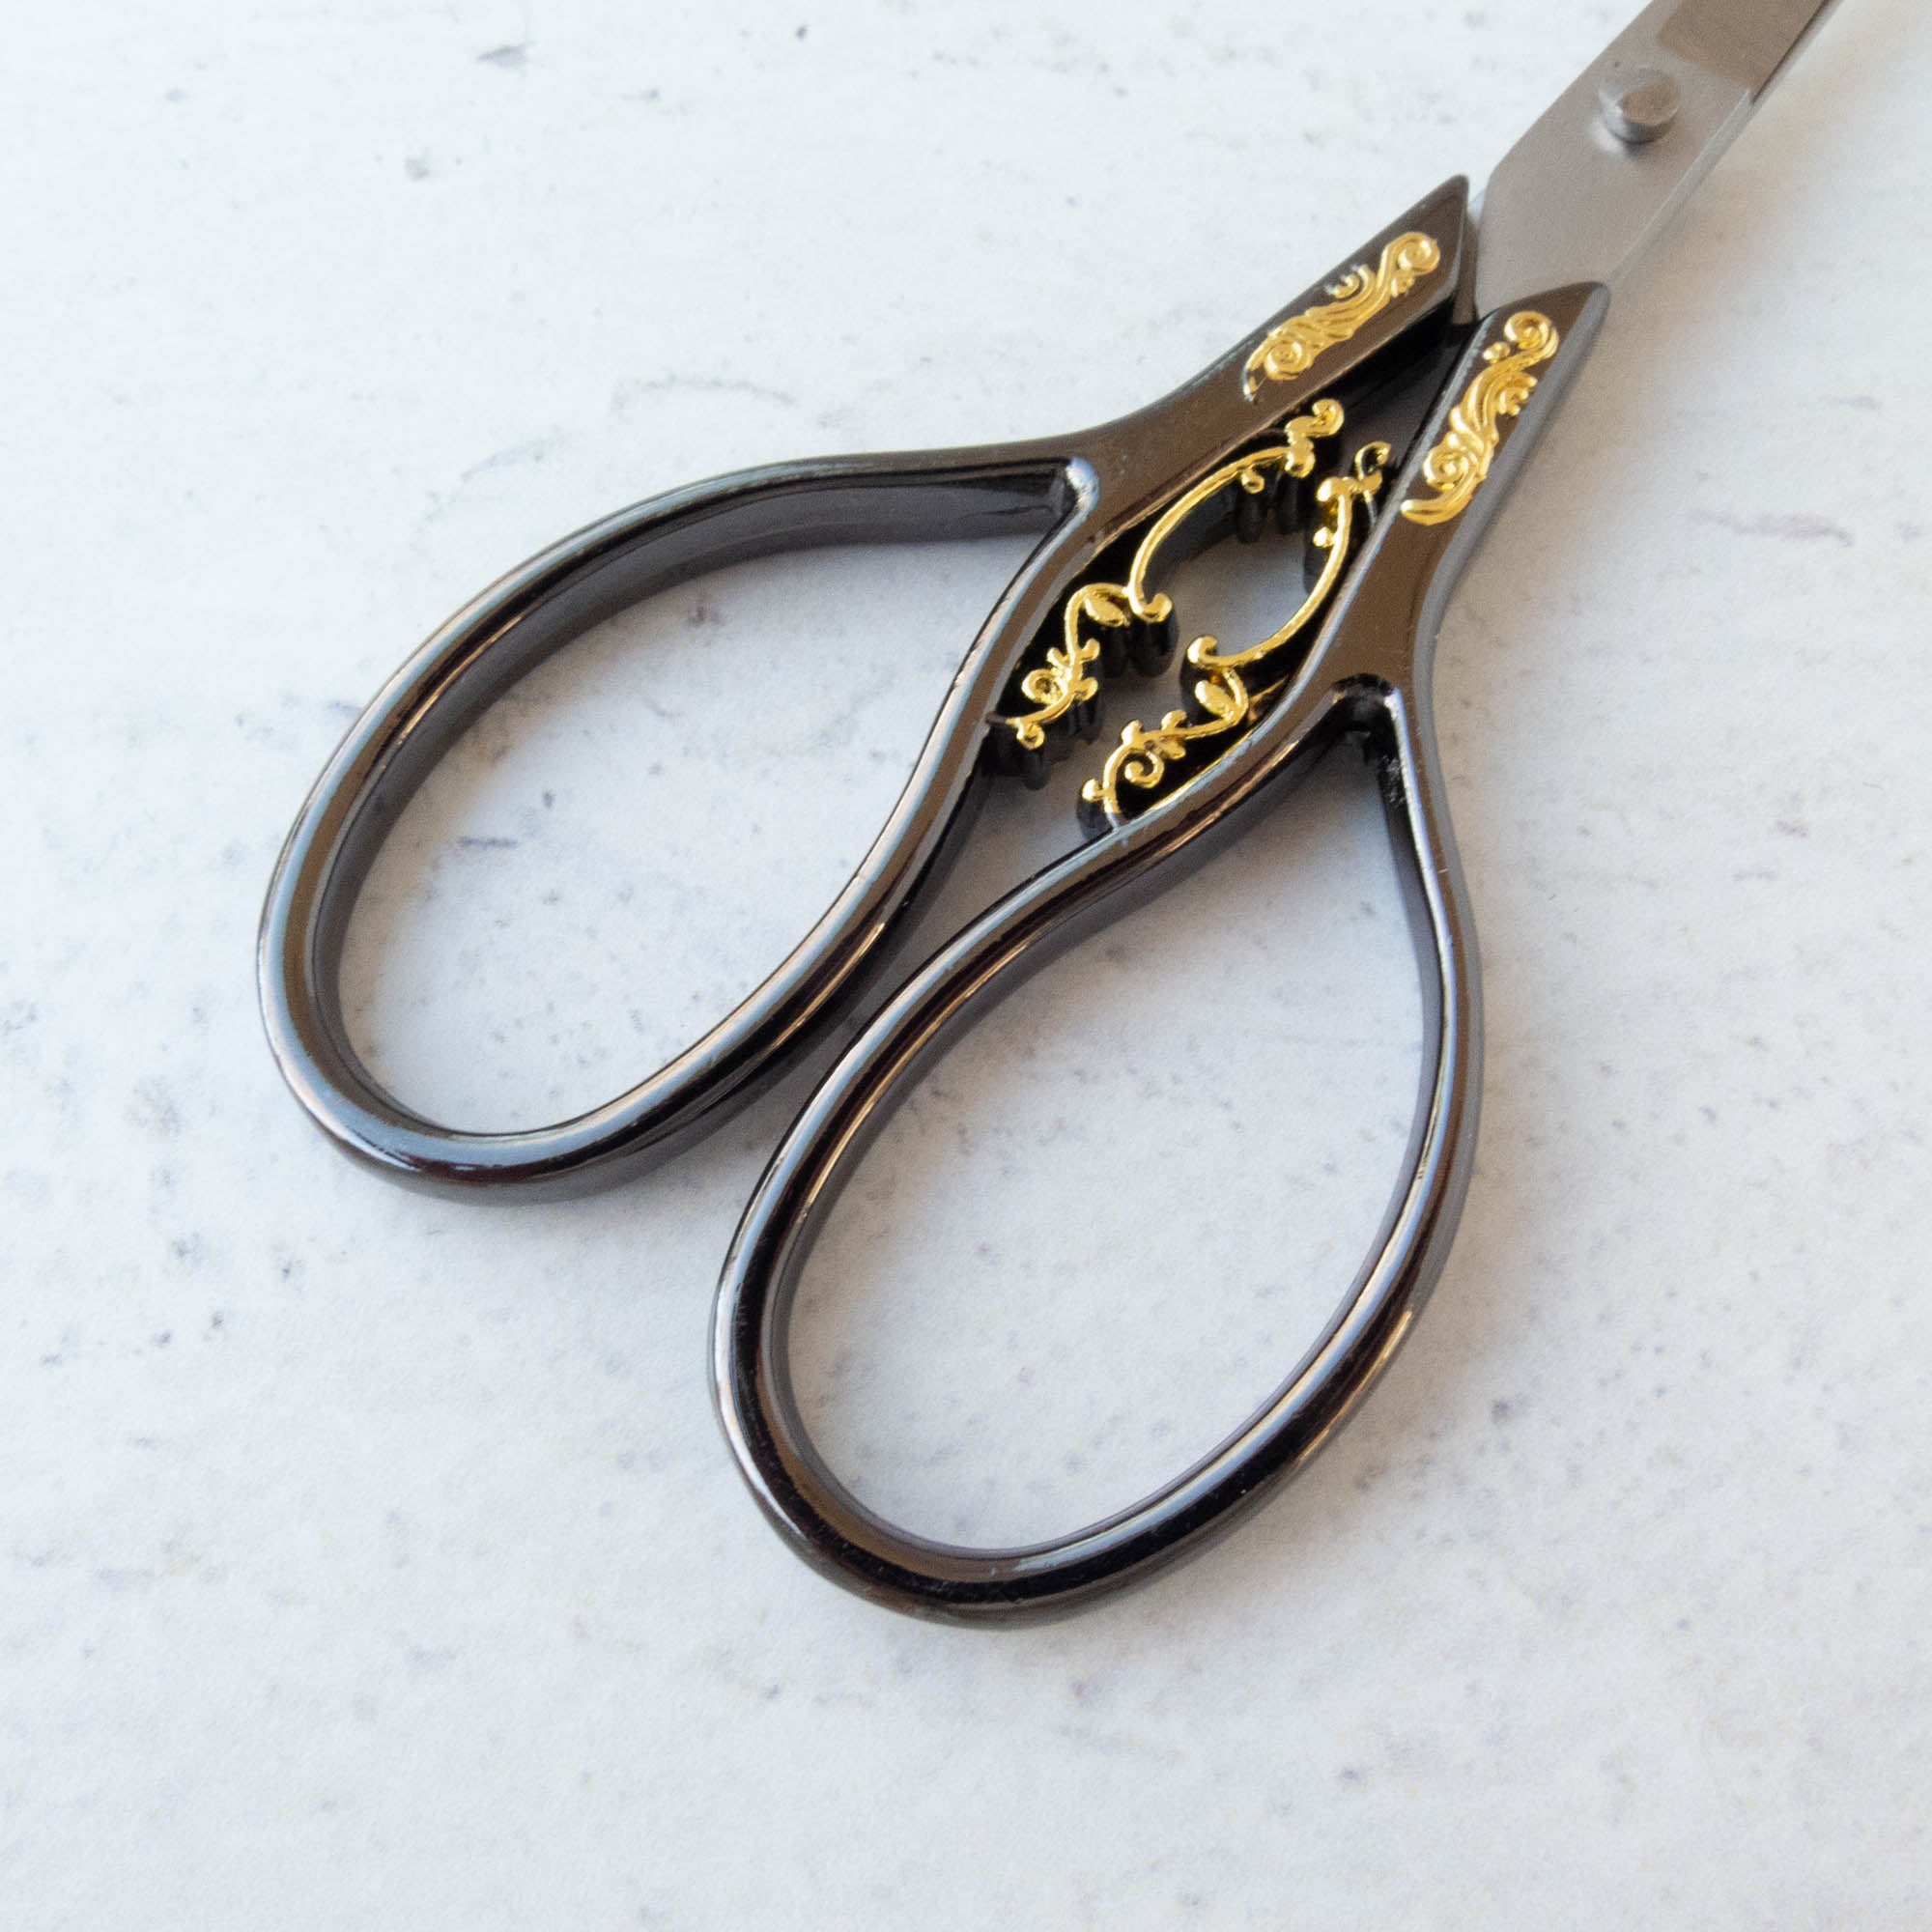 Scissors: KAI Hand Embroidery / Goldwork Embroidery – Berlin